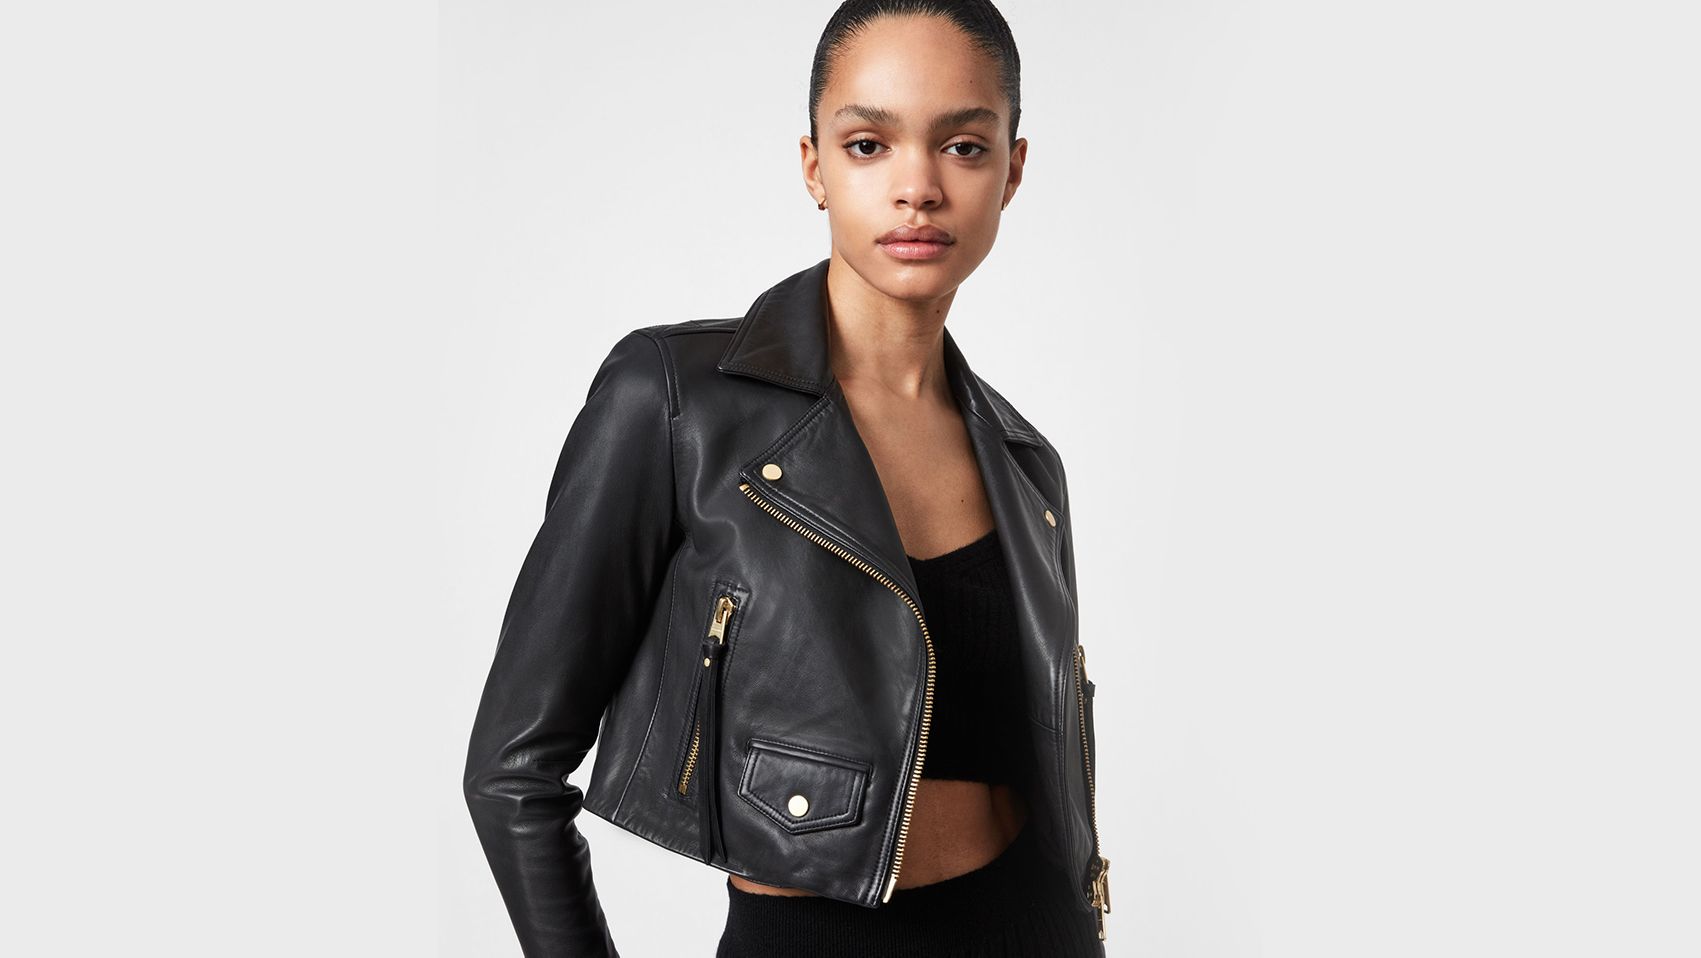 Women's Leather Jackets